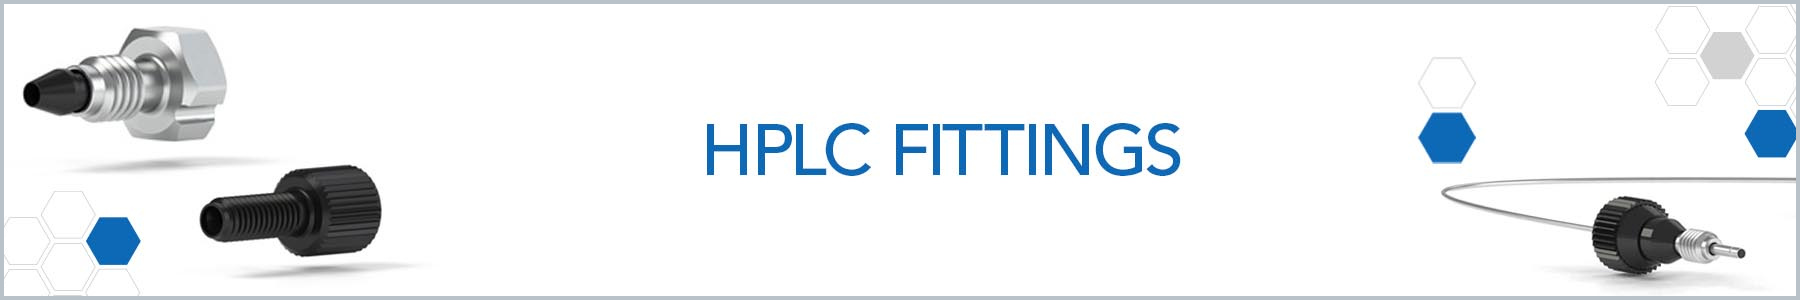 HPLC Fittings banner